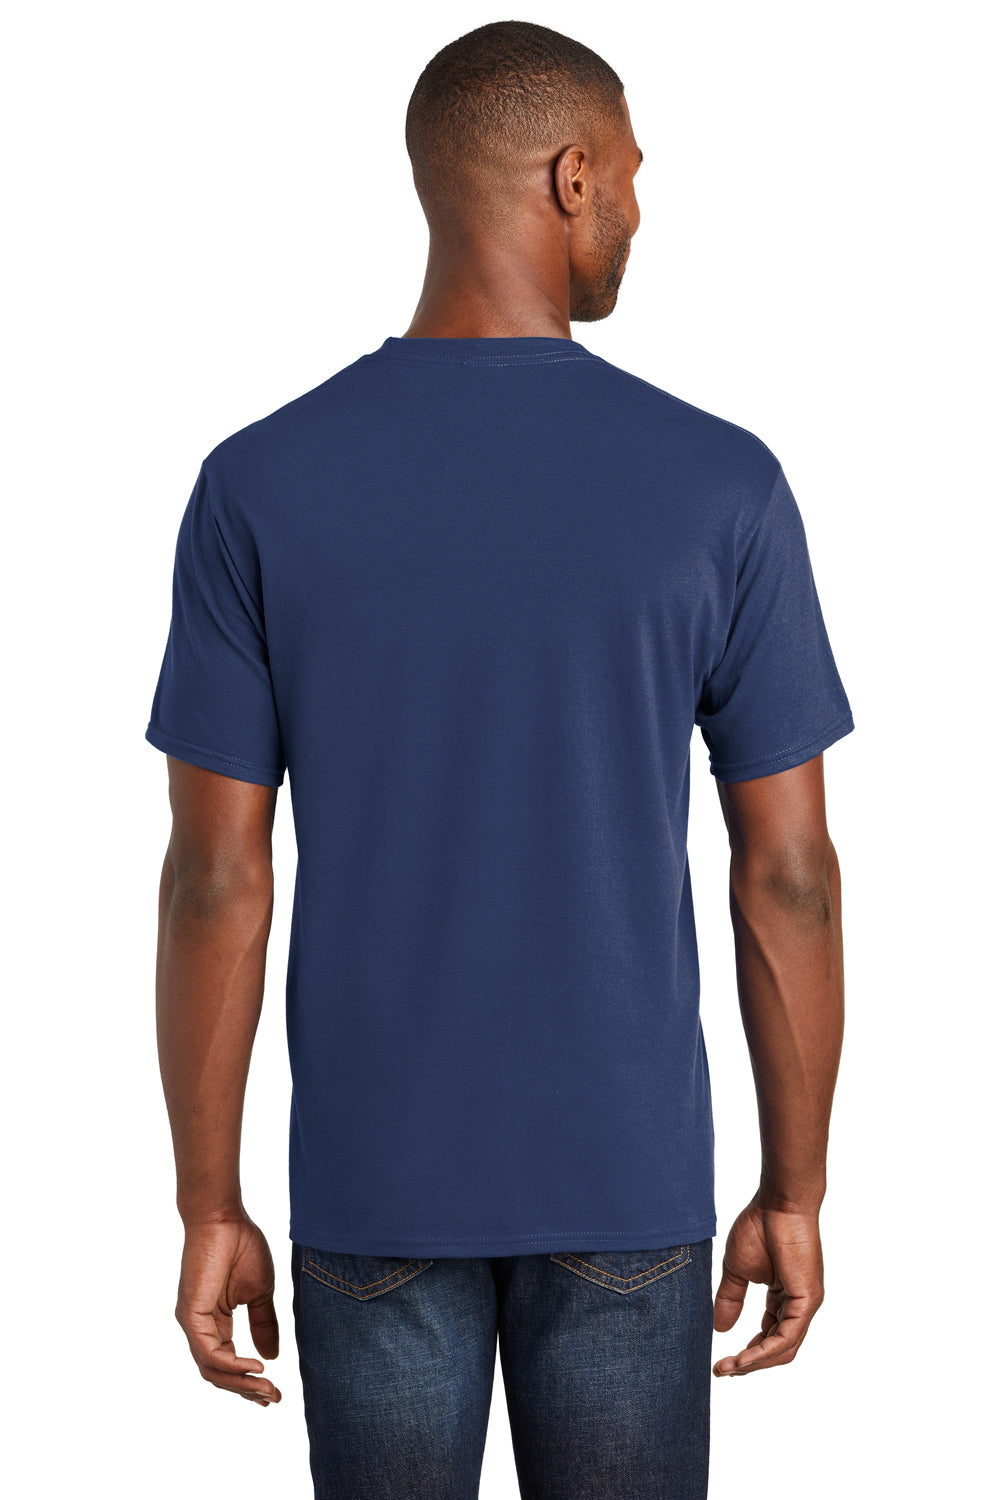 Port & Company PC450 Mens Fan Favorite Short Sleeve Crewneck T-Shirt Navy Blue Back